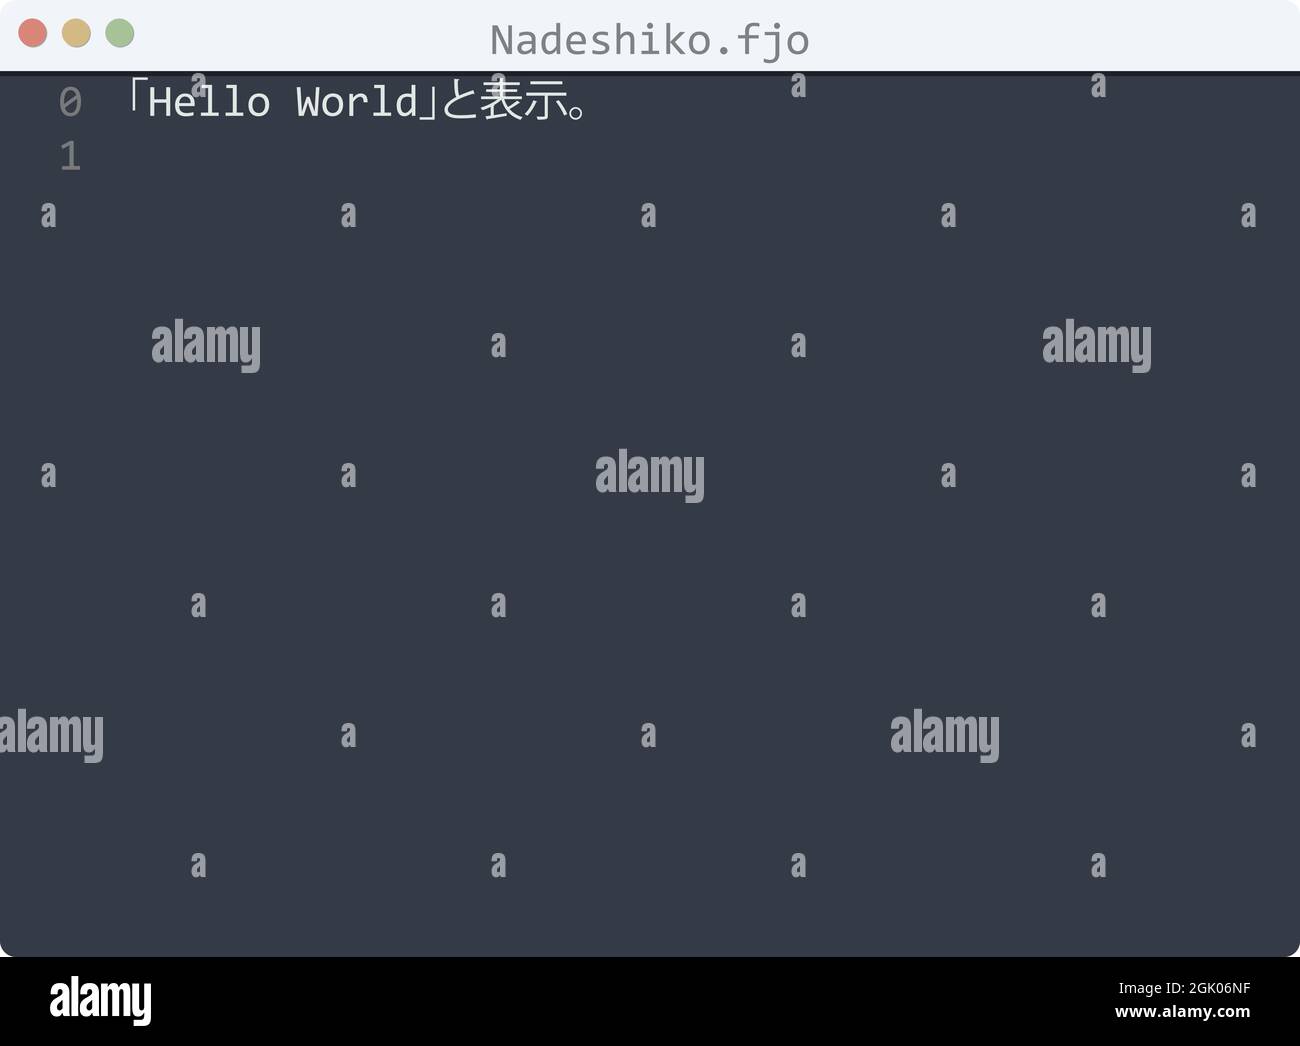 Nadeshiko language Hello World program sample in editor window illustration Stock Vector